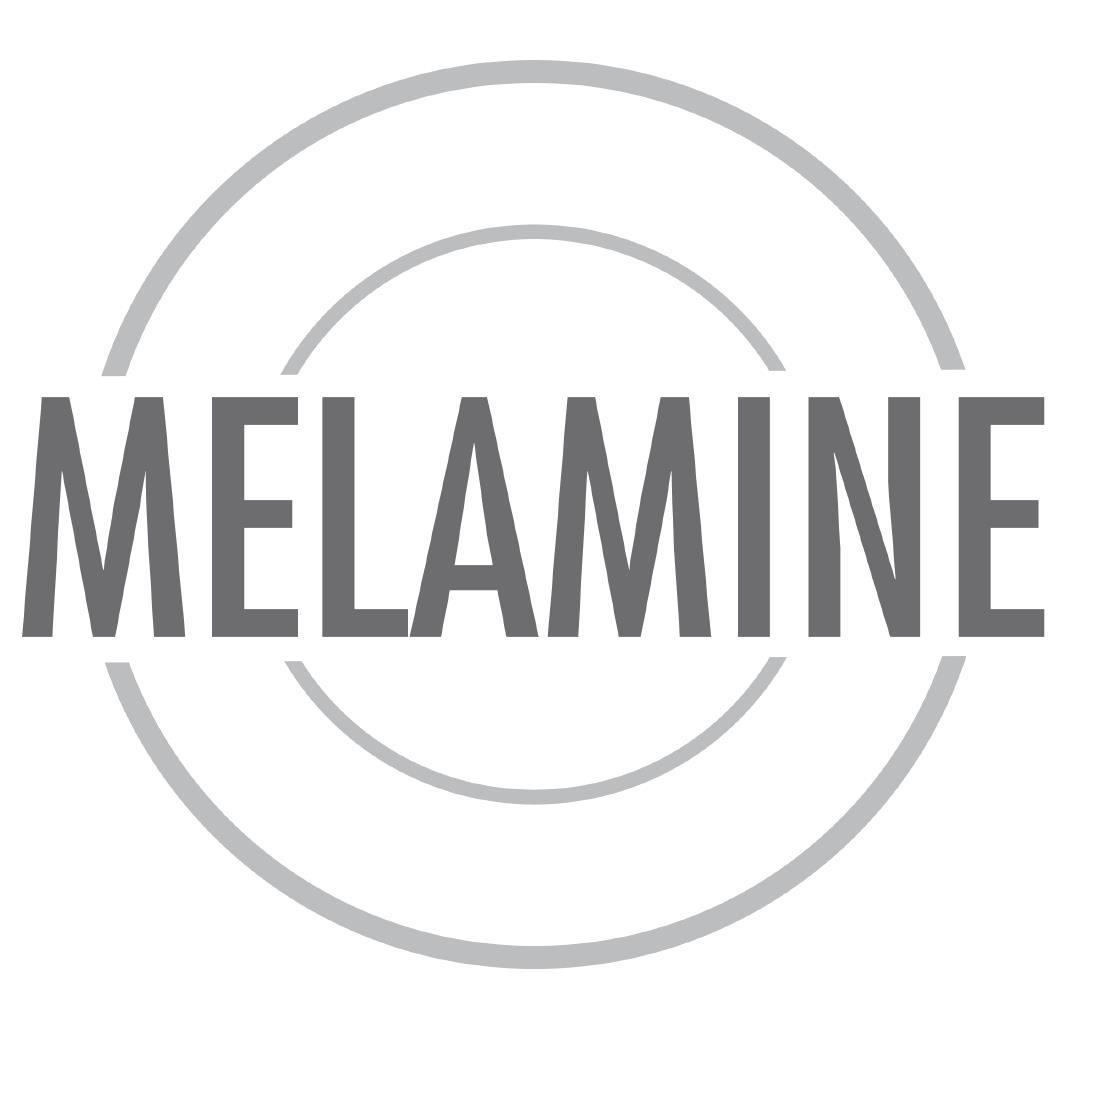 Olympia Kristallon Melamine Fluted Ramekins Black 70mm (Pack of 12) - DM163  - 2